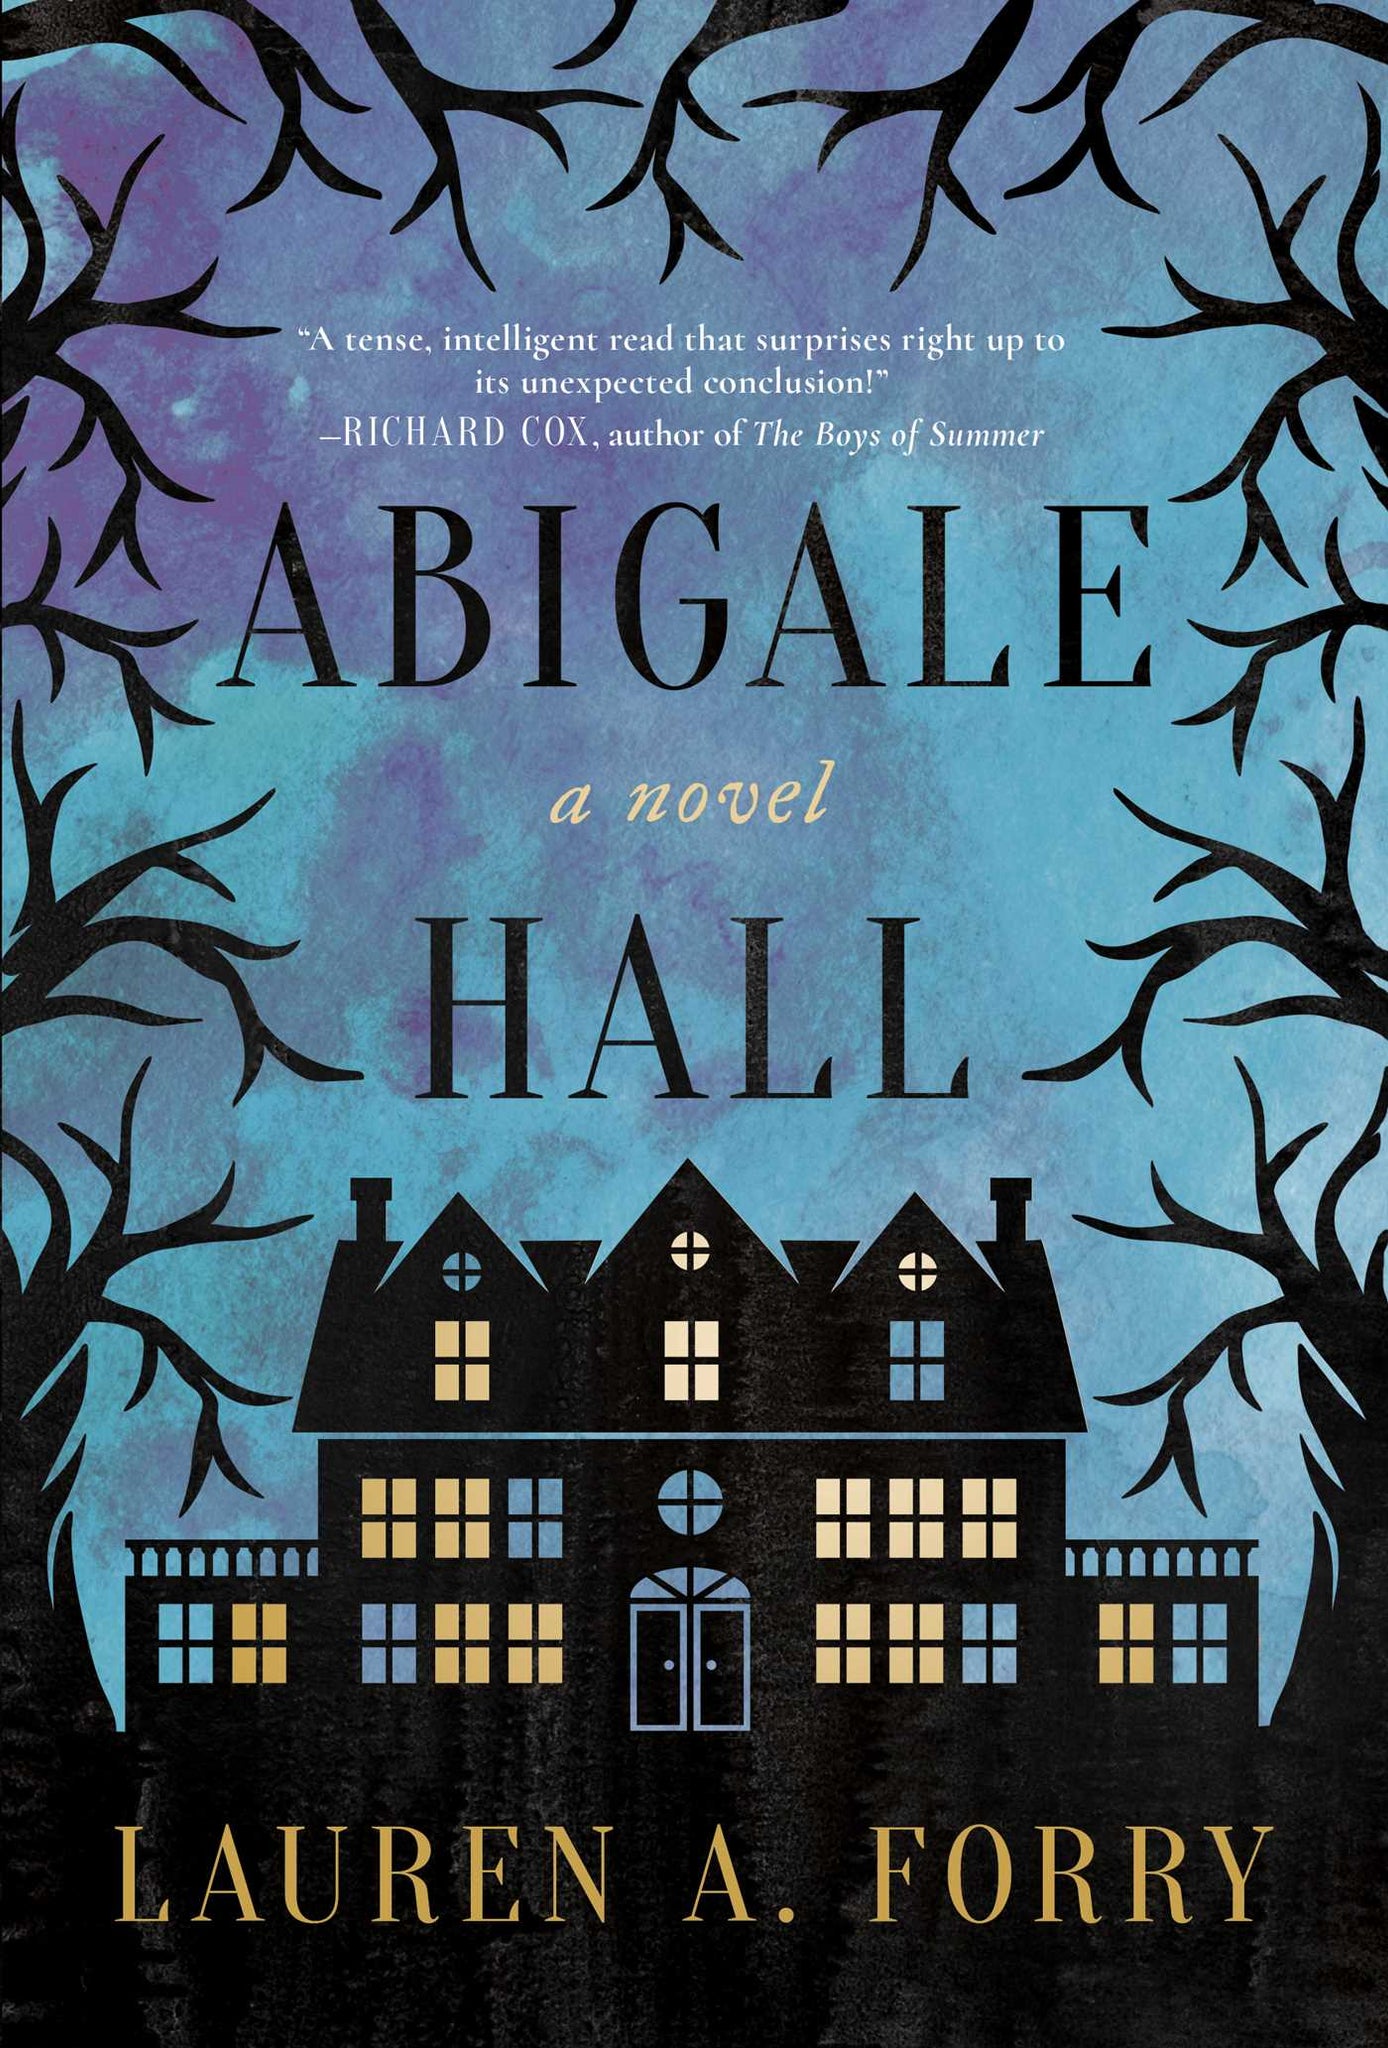 Abigale Hall : A Novel